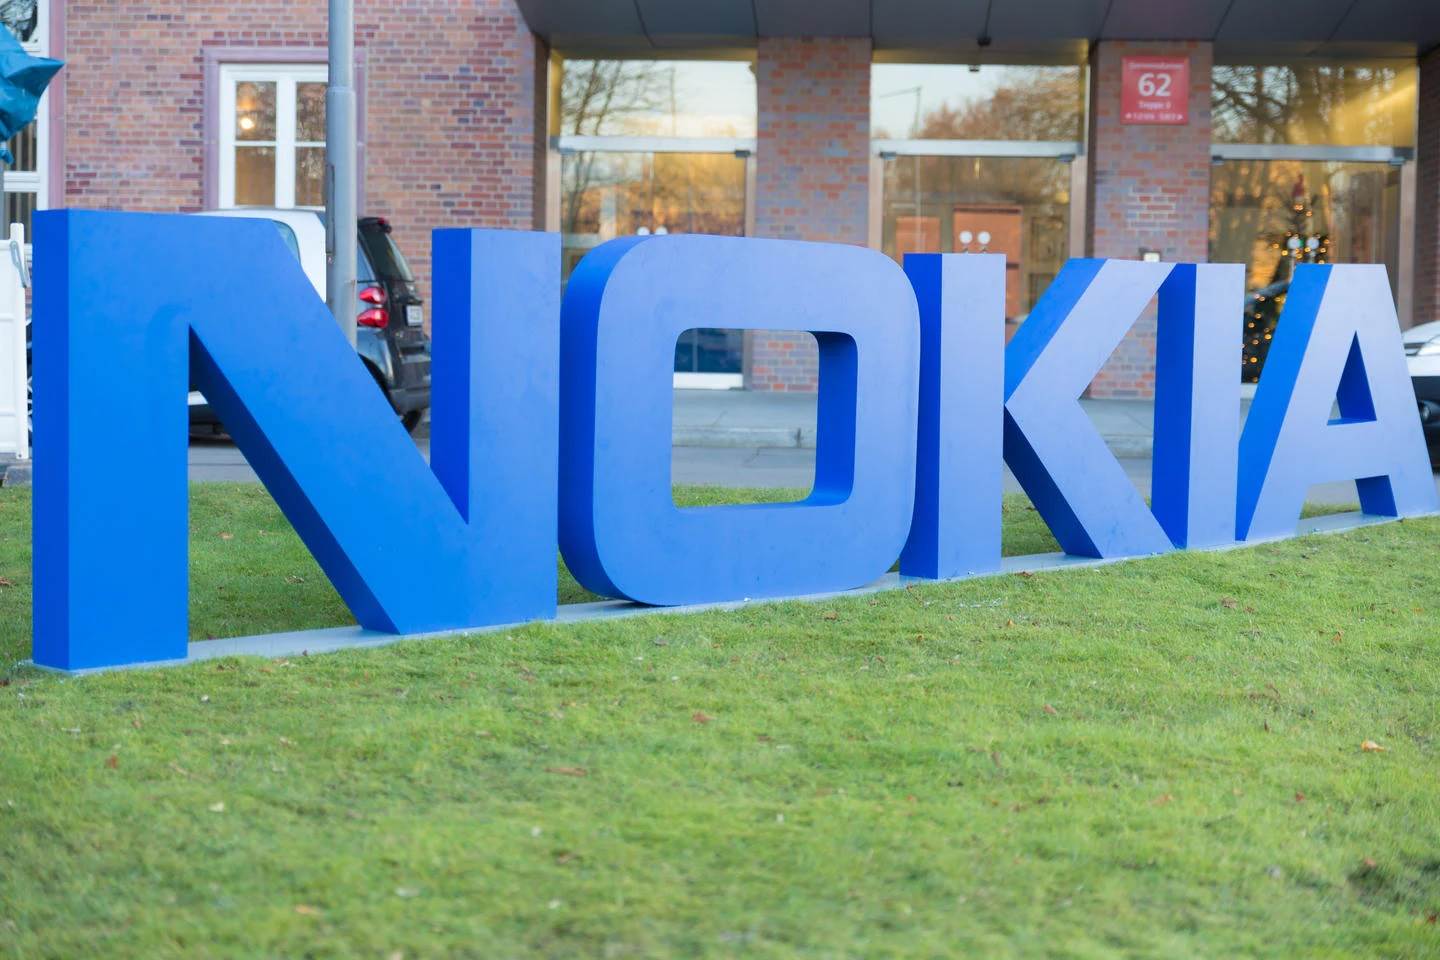  Nokia logo.jpg 